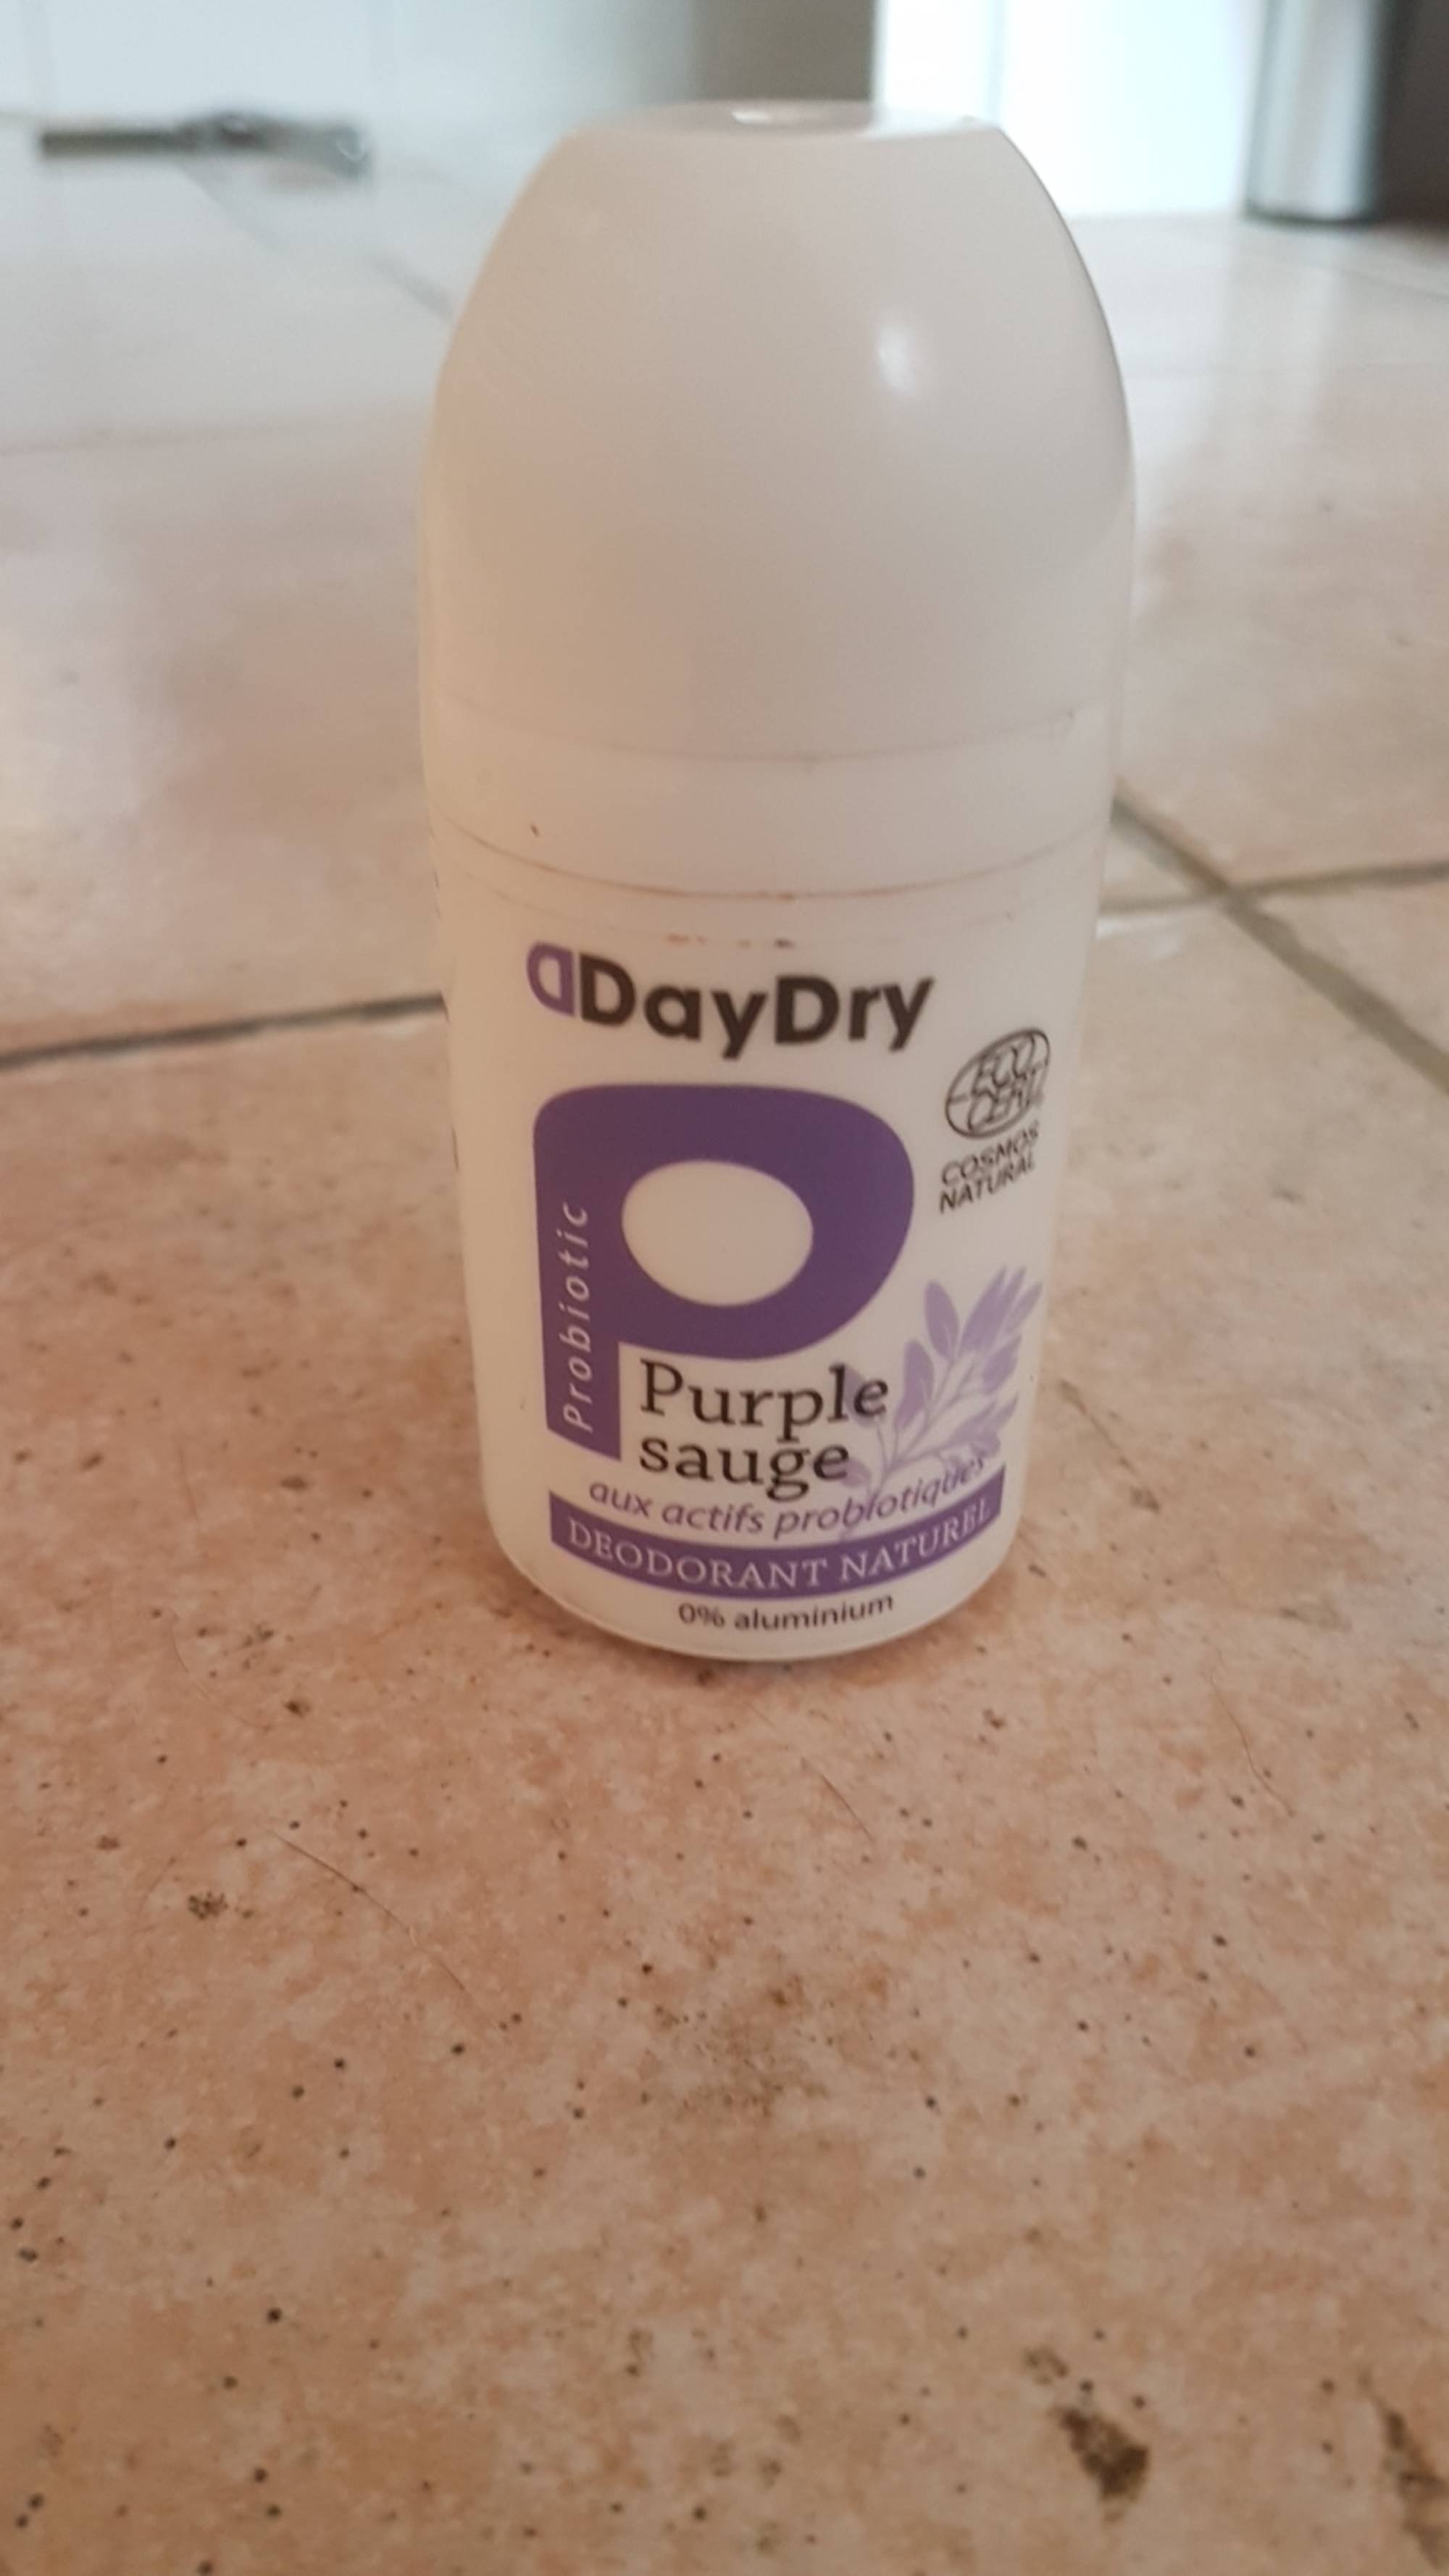 DAYDRY - Probiotic purple sauge - Déodorant naturel